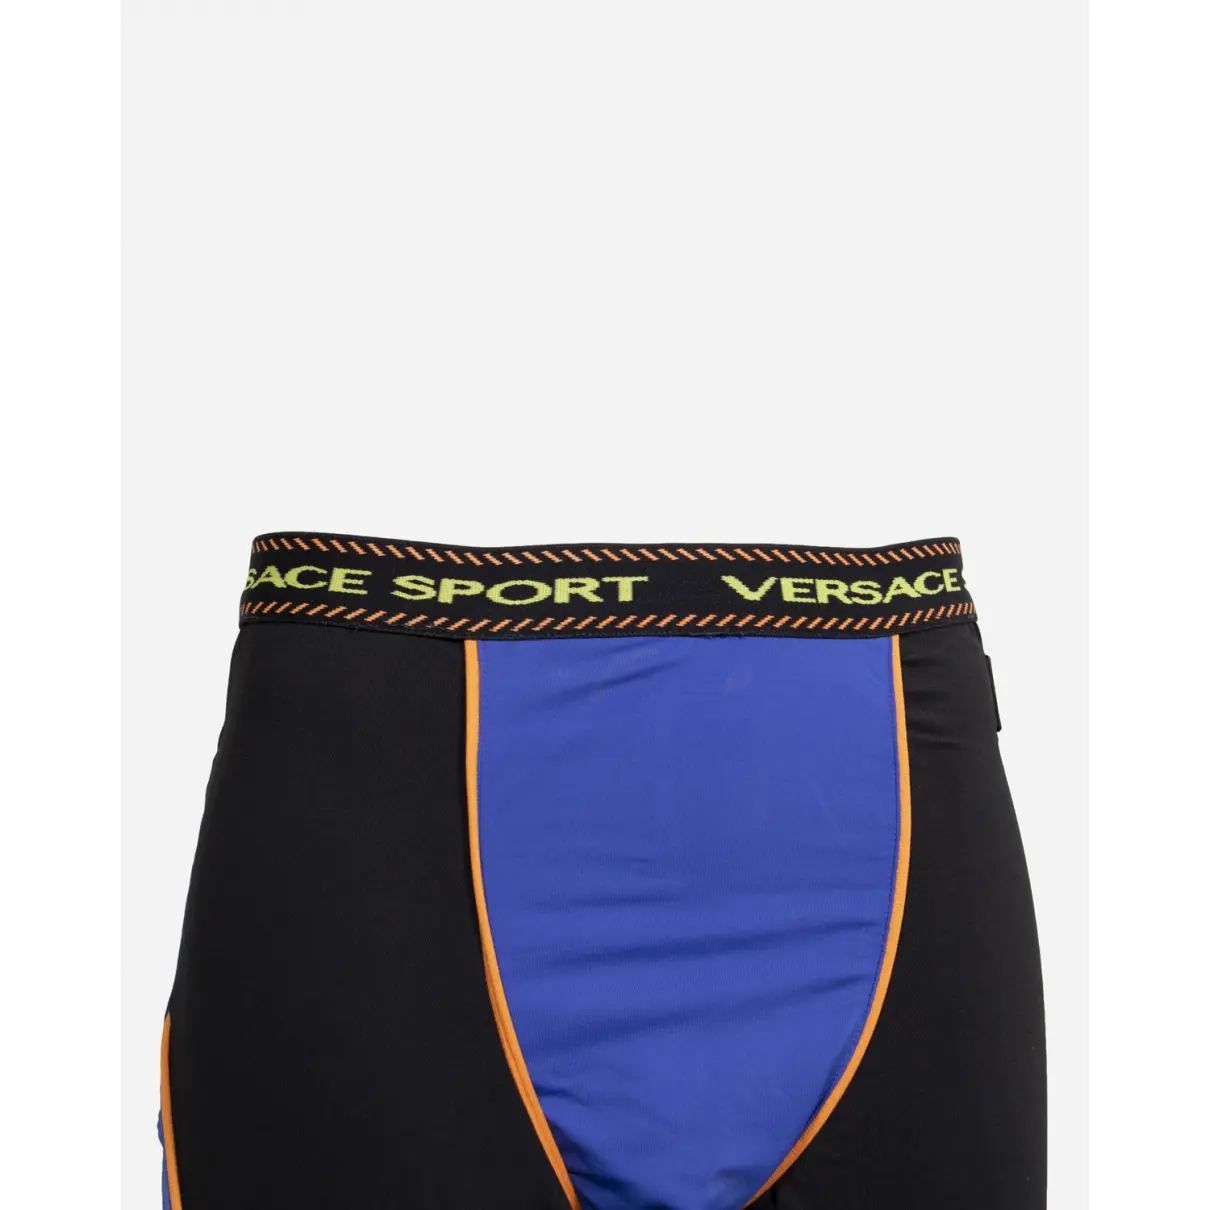 Buy Versace Trousers online